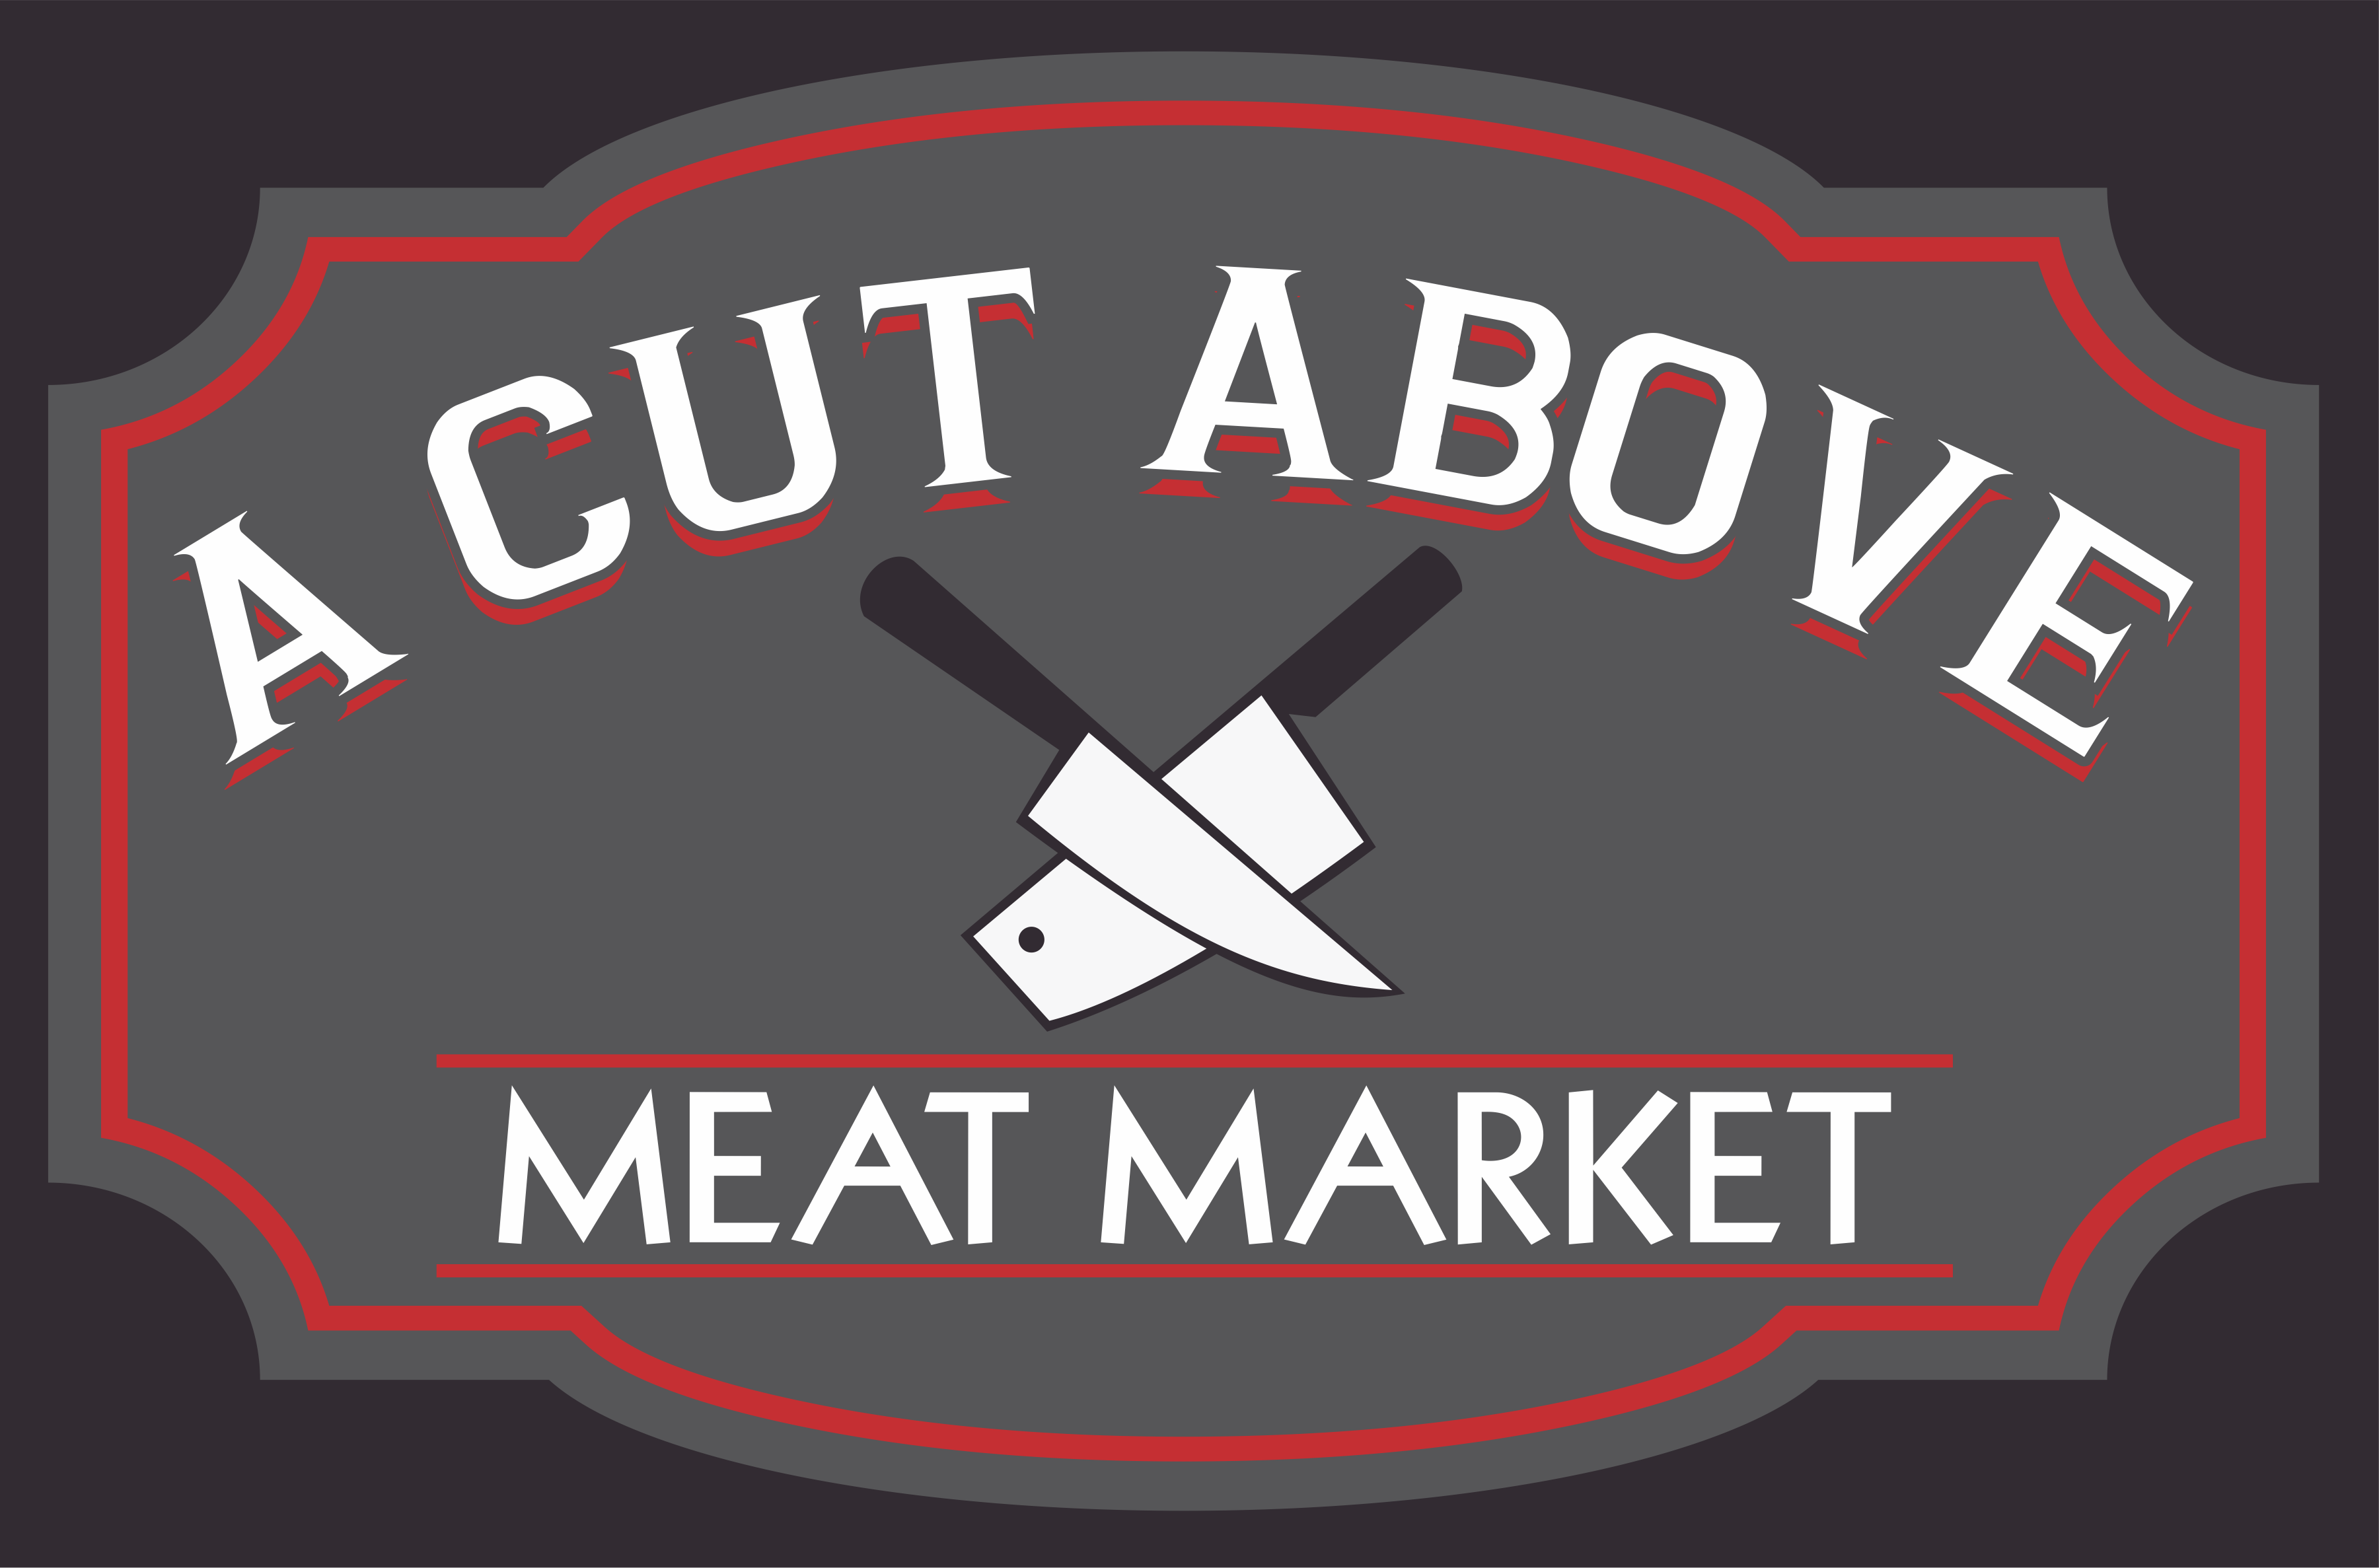 A Cut Above Meat Market